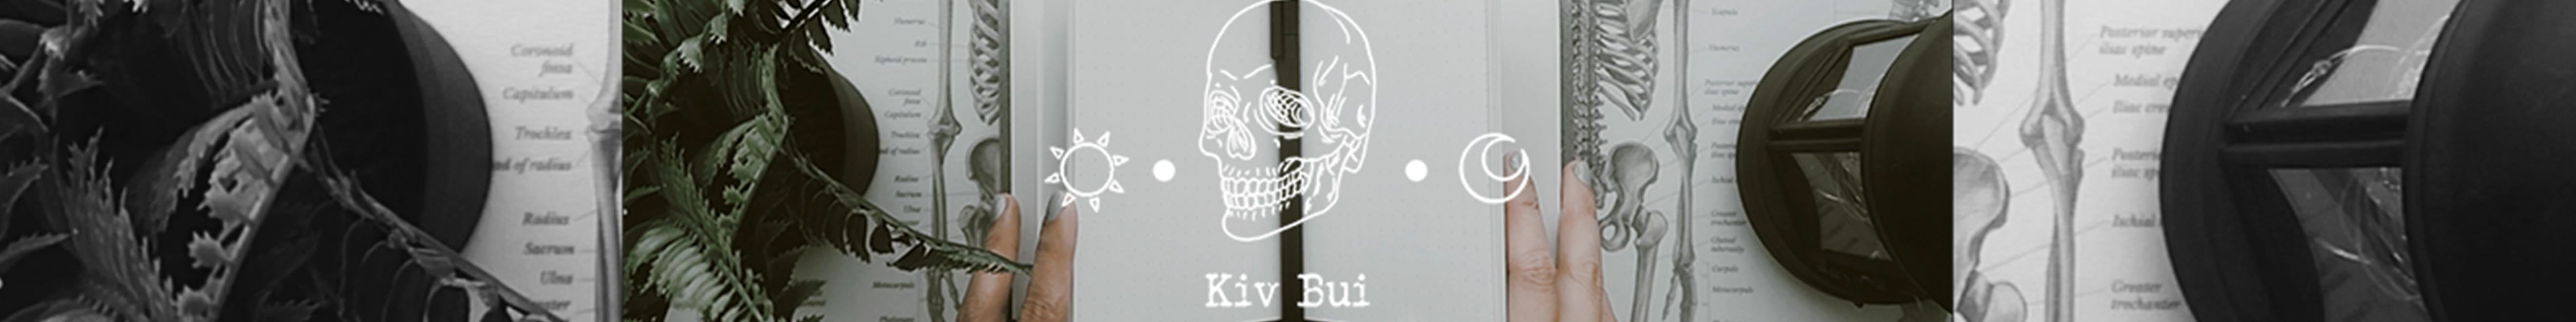 Kiv Bui's profile banner